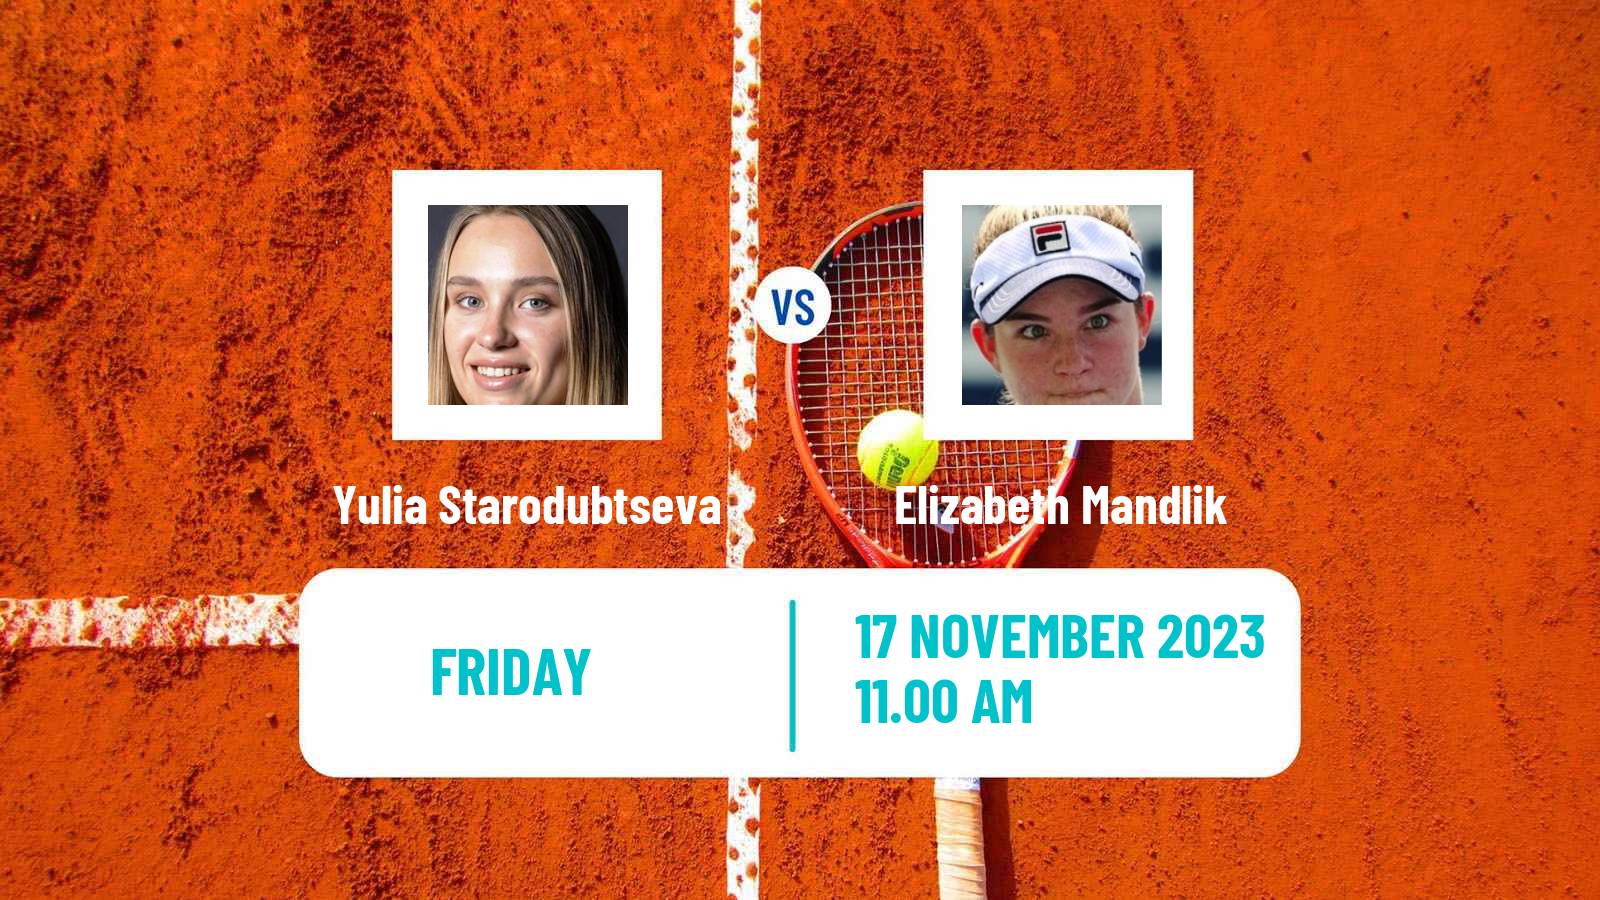 Tennis Colina Challenger Women Yulia Starodubtseva - Elizabeth Mandlik